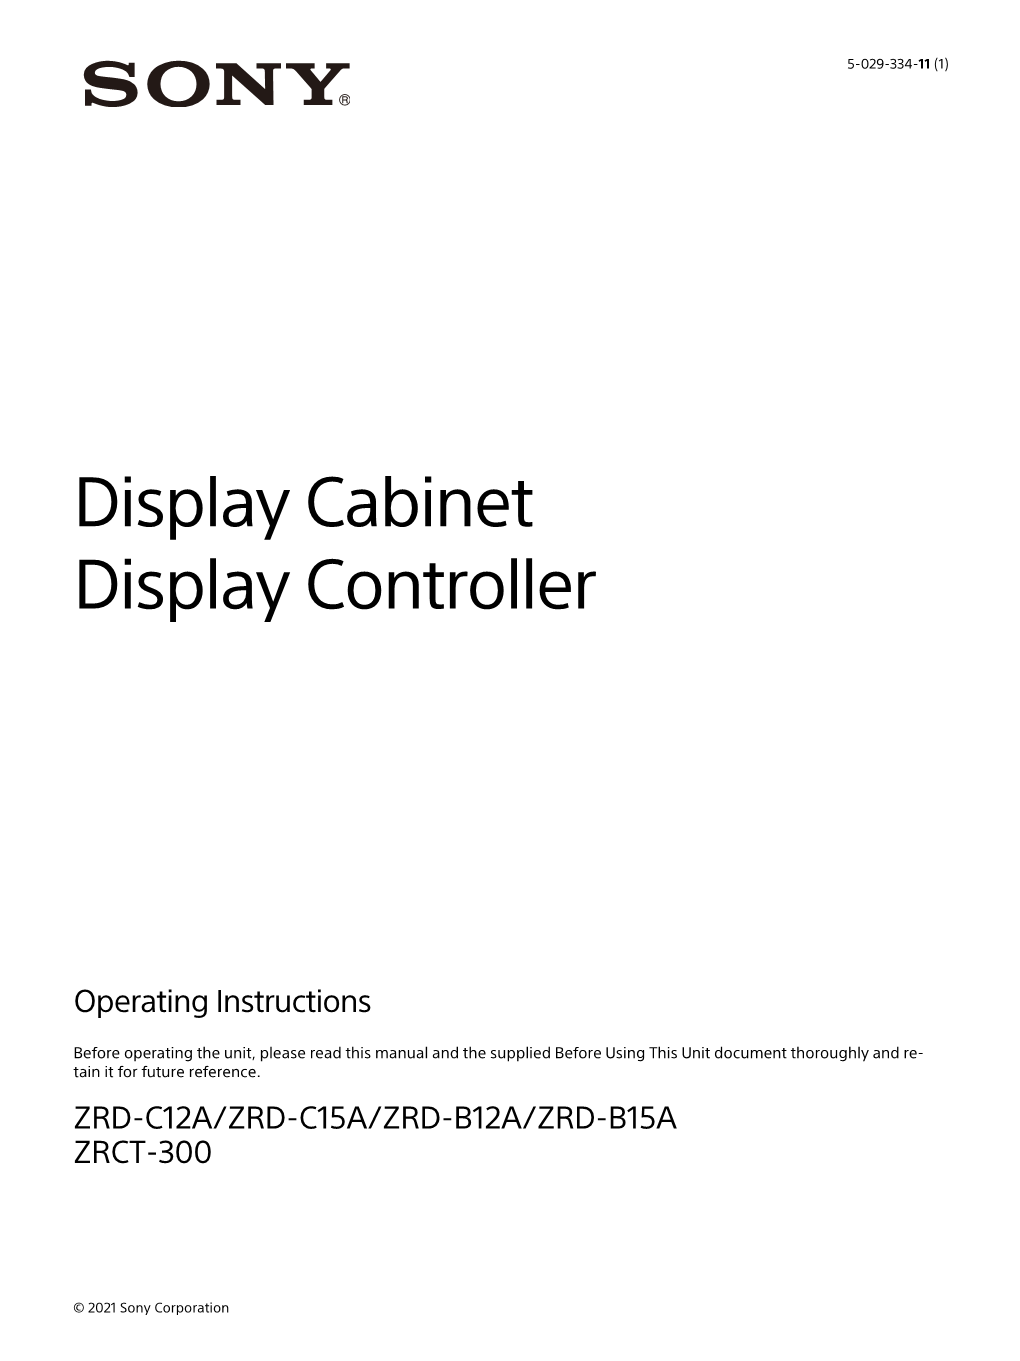 Display Cabinet Display Controller